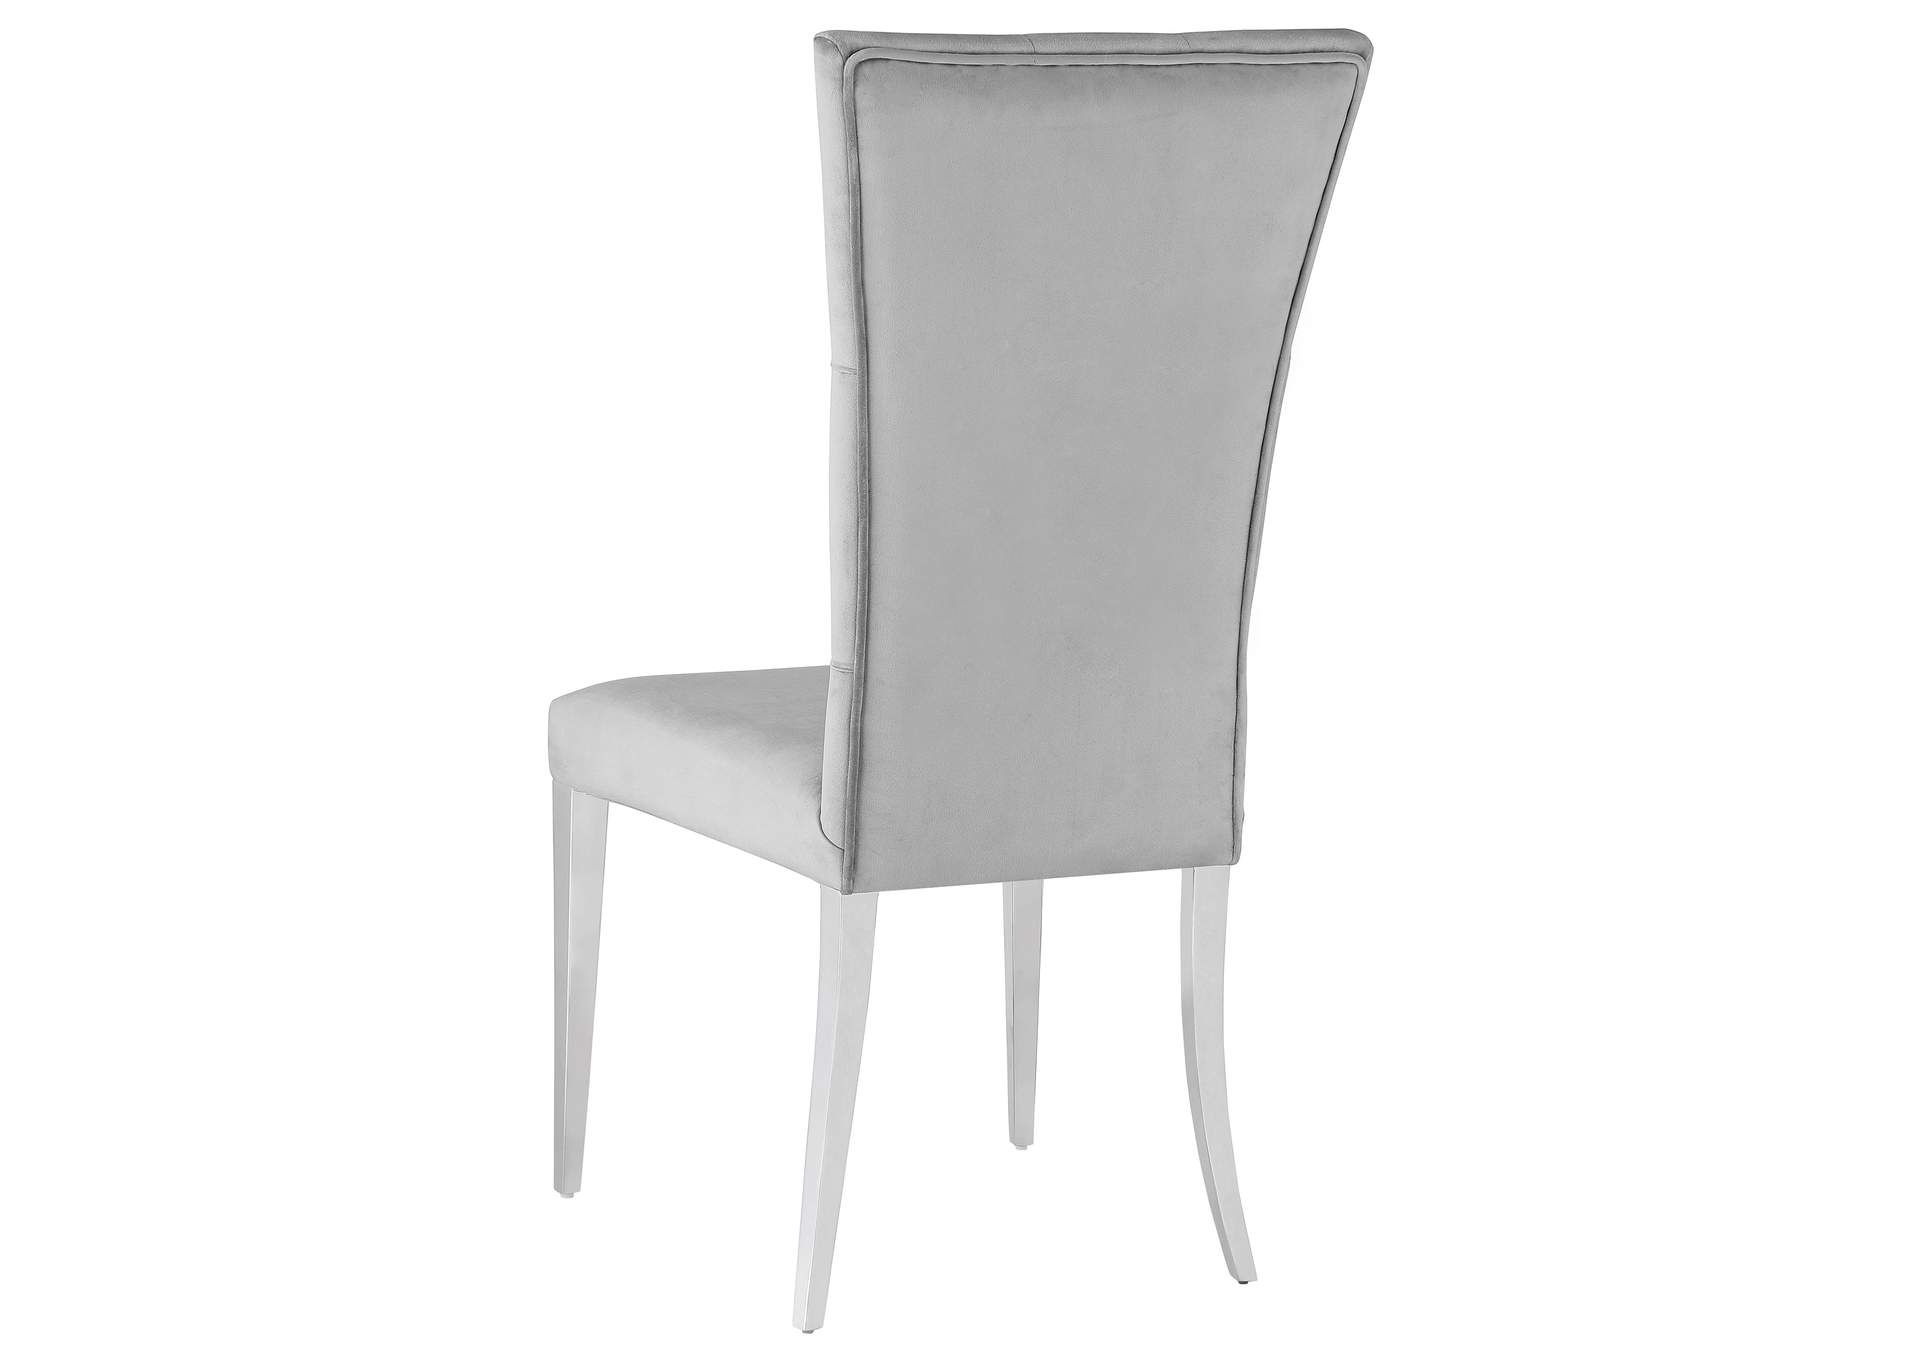 Kerwin 7-piece Dining Room Set Grey and Chrome,Coaster Furniture